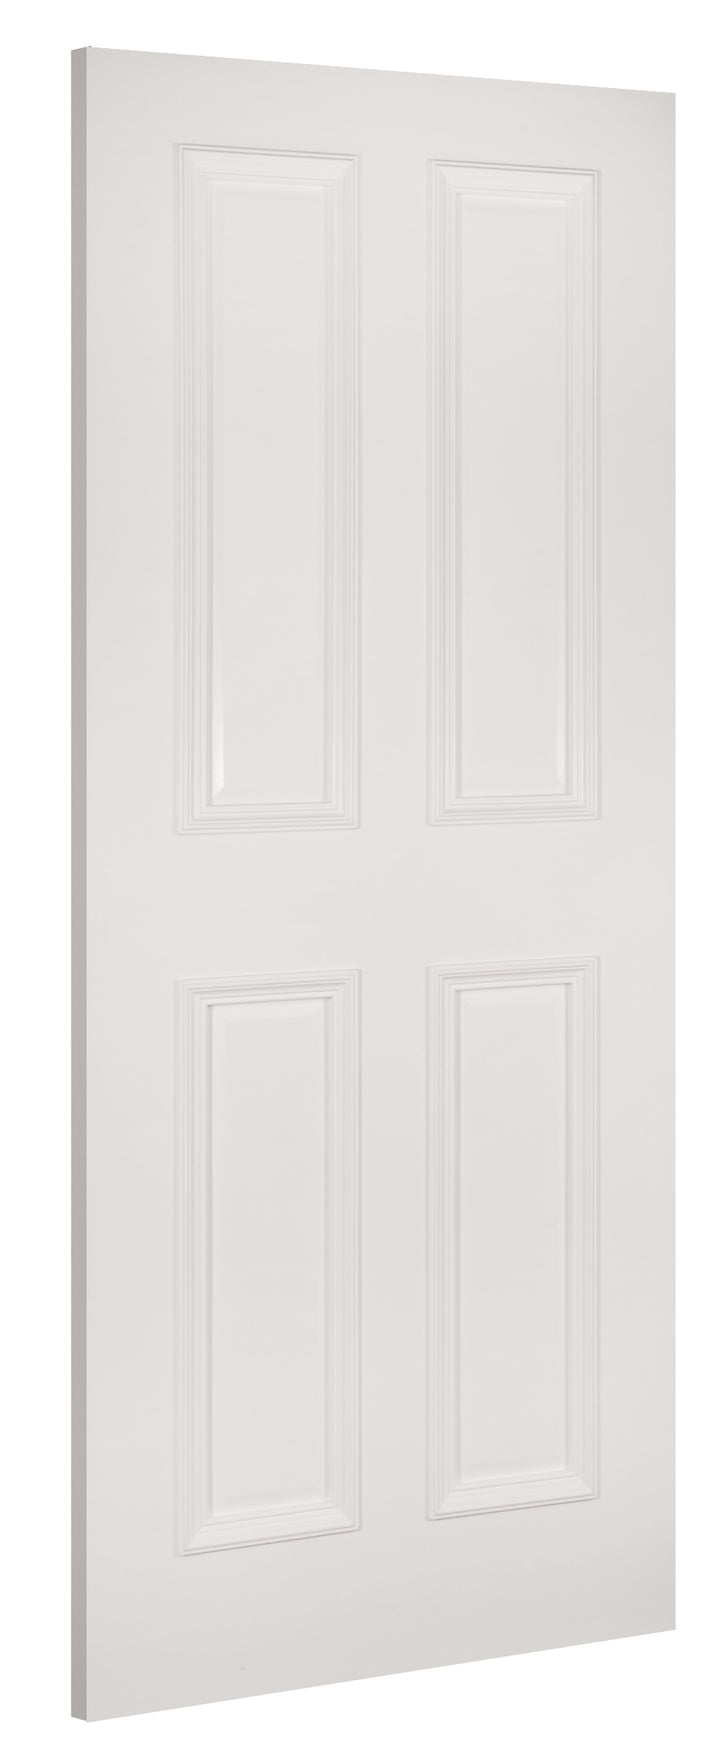 Deanta WR1 White Primed Door - Solid